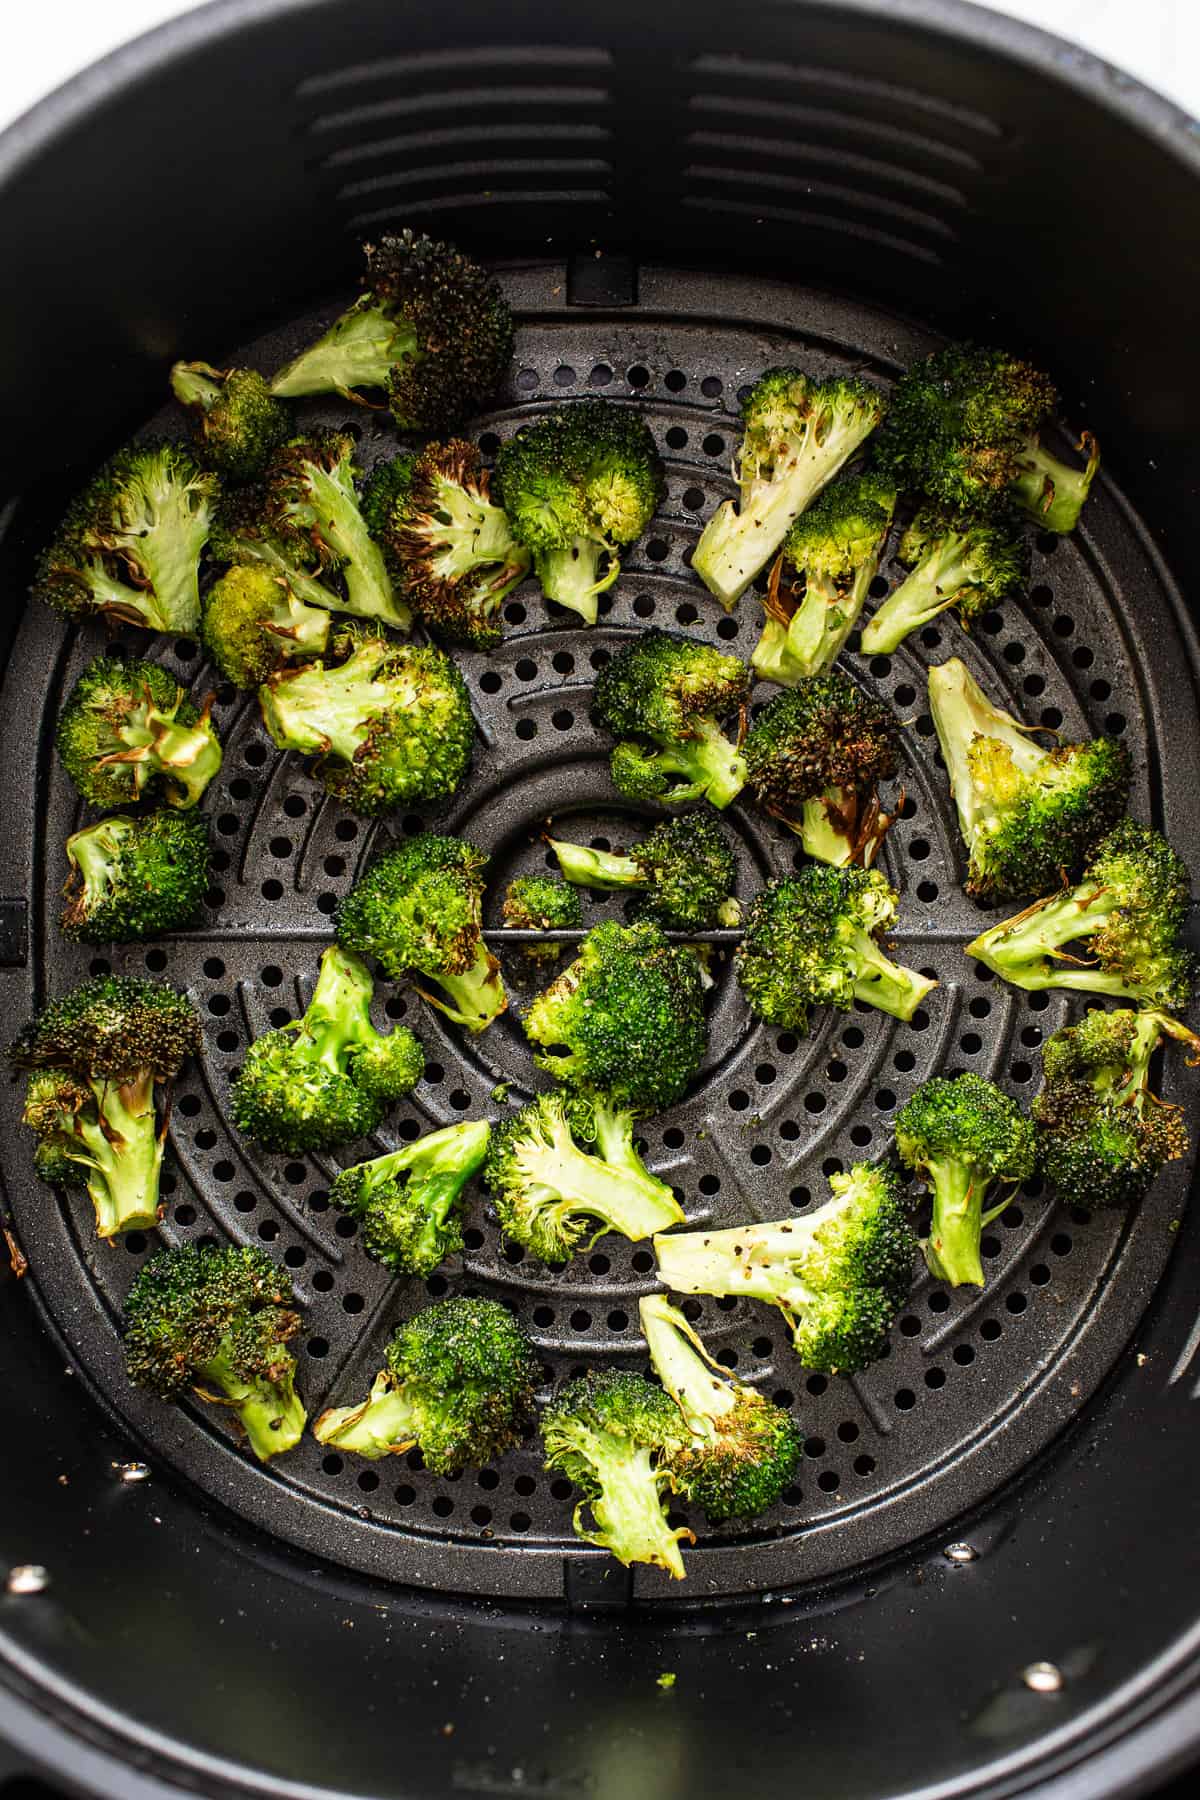 Crispy broccoli florets in an air fryer.